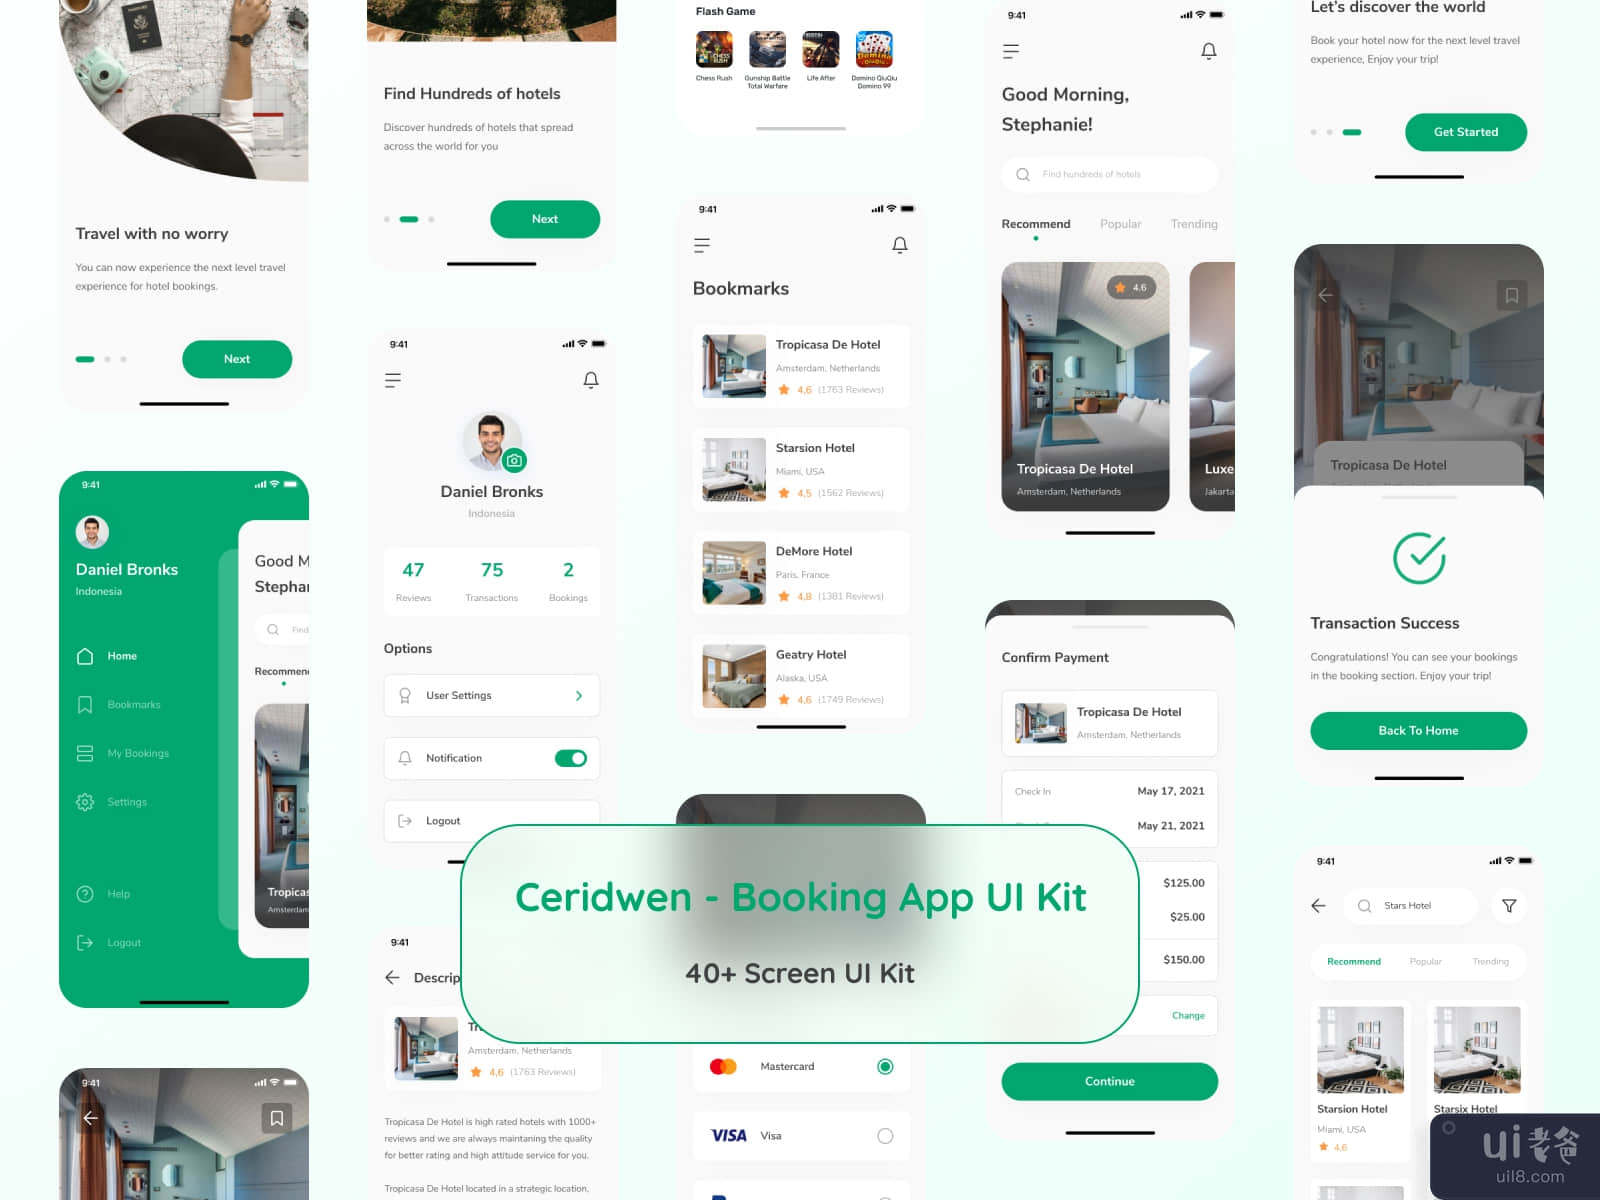 Ceridwen - Booking App UI Kit